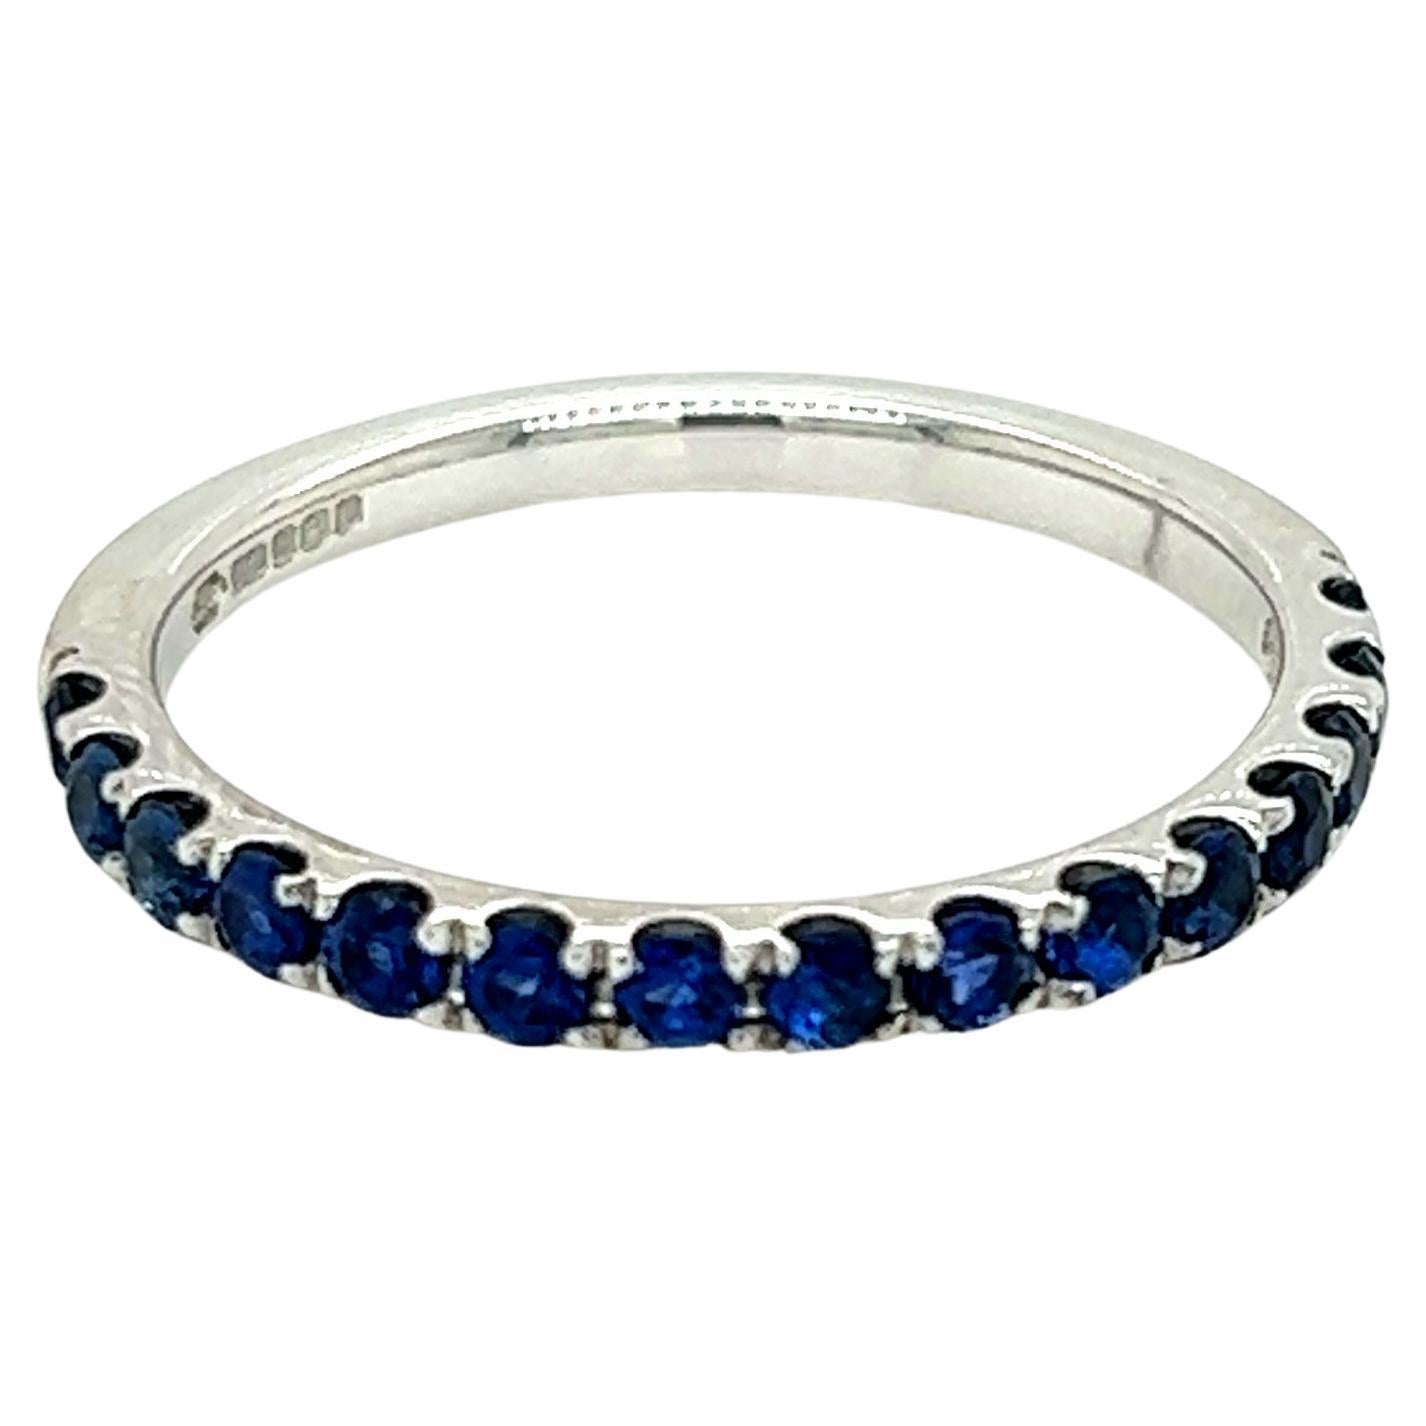 0.24 Carat Round Brilliant Blue Sapphire Band Ring in 18 Karat White Gold